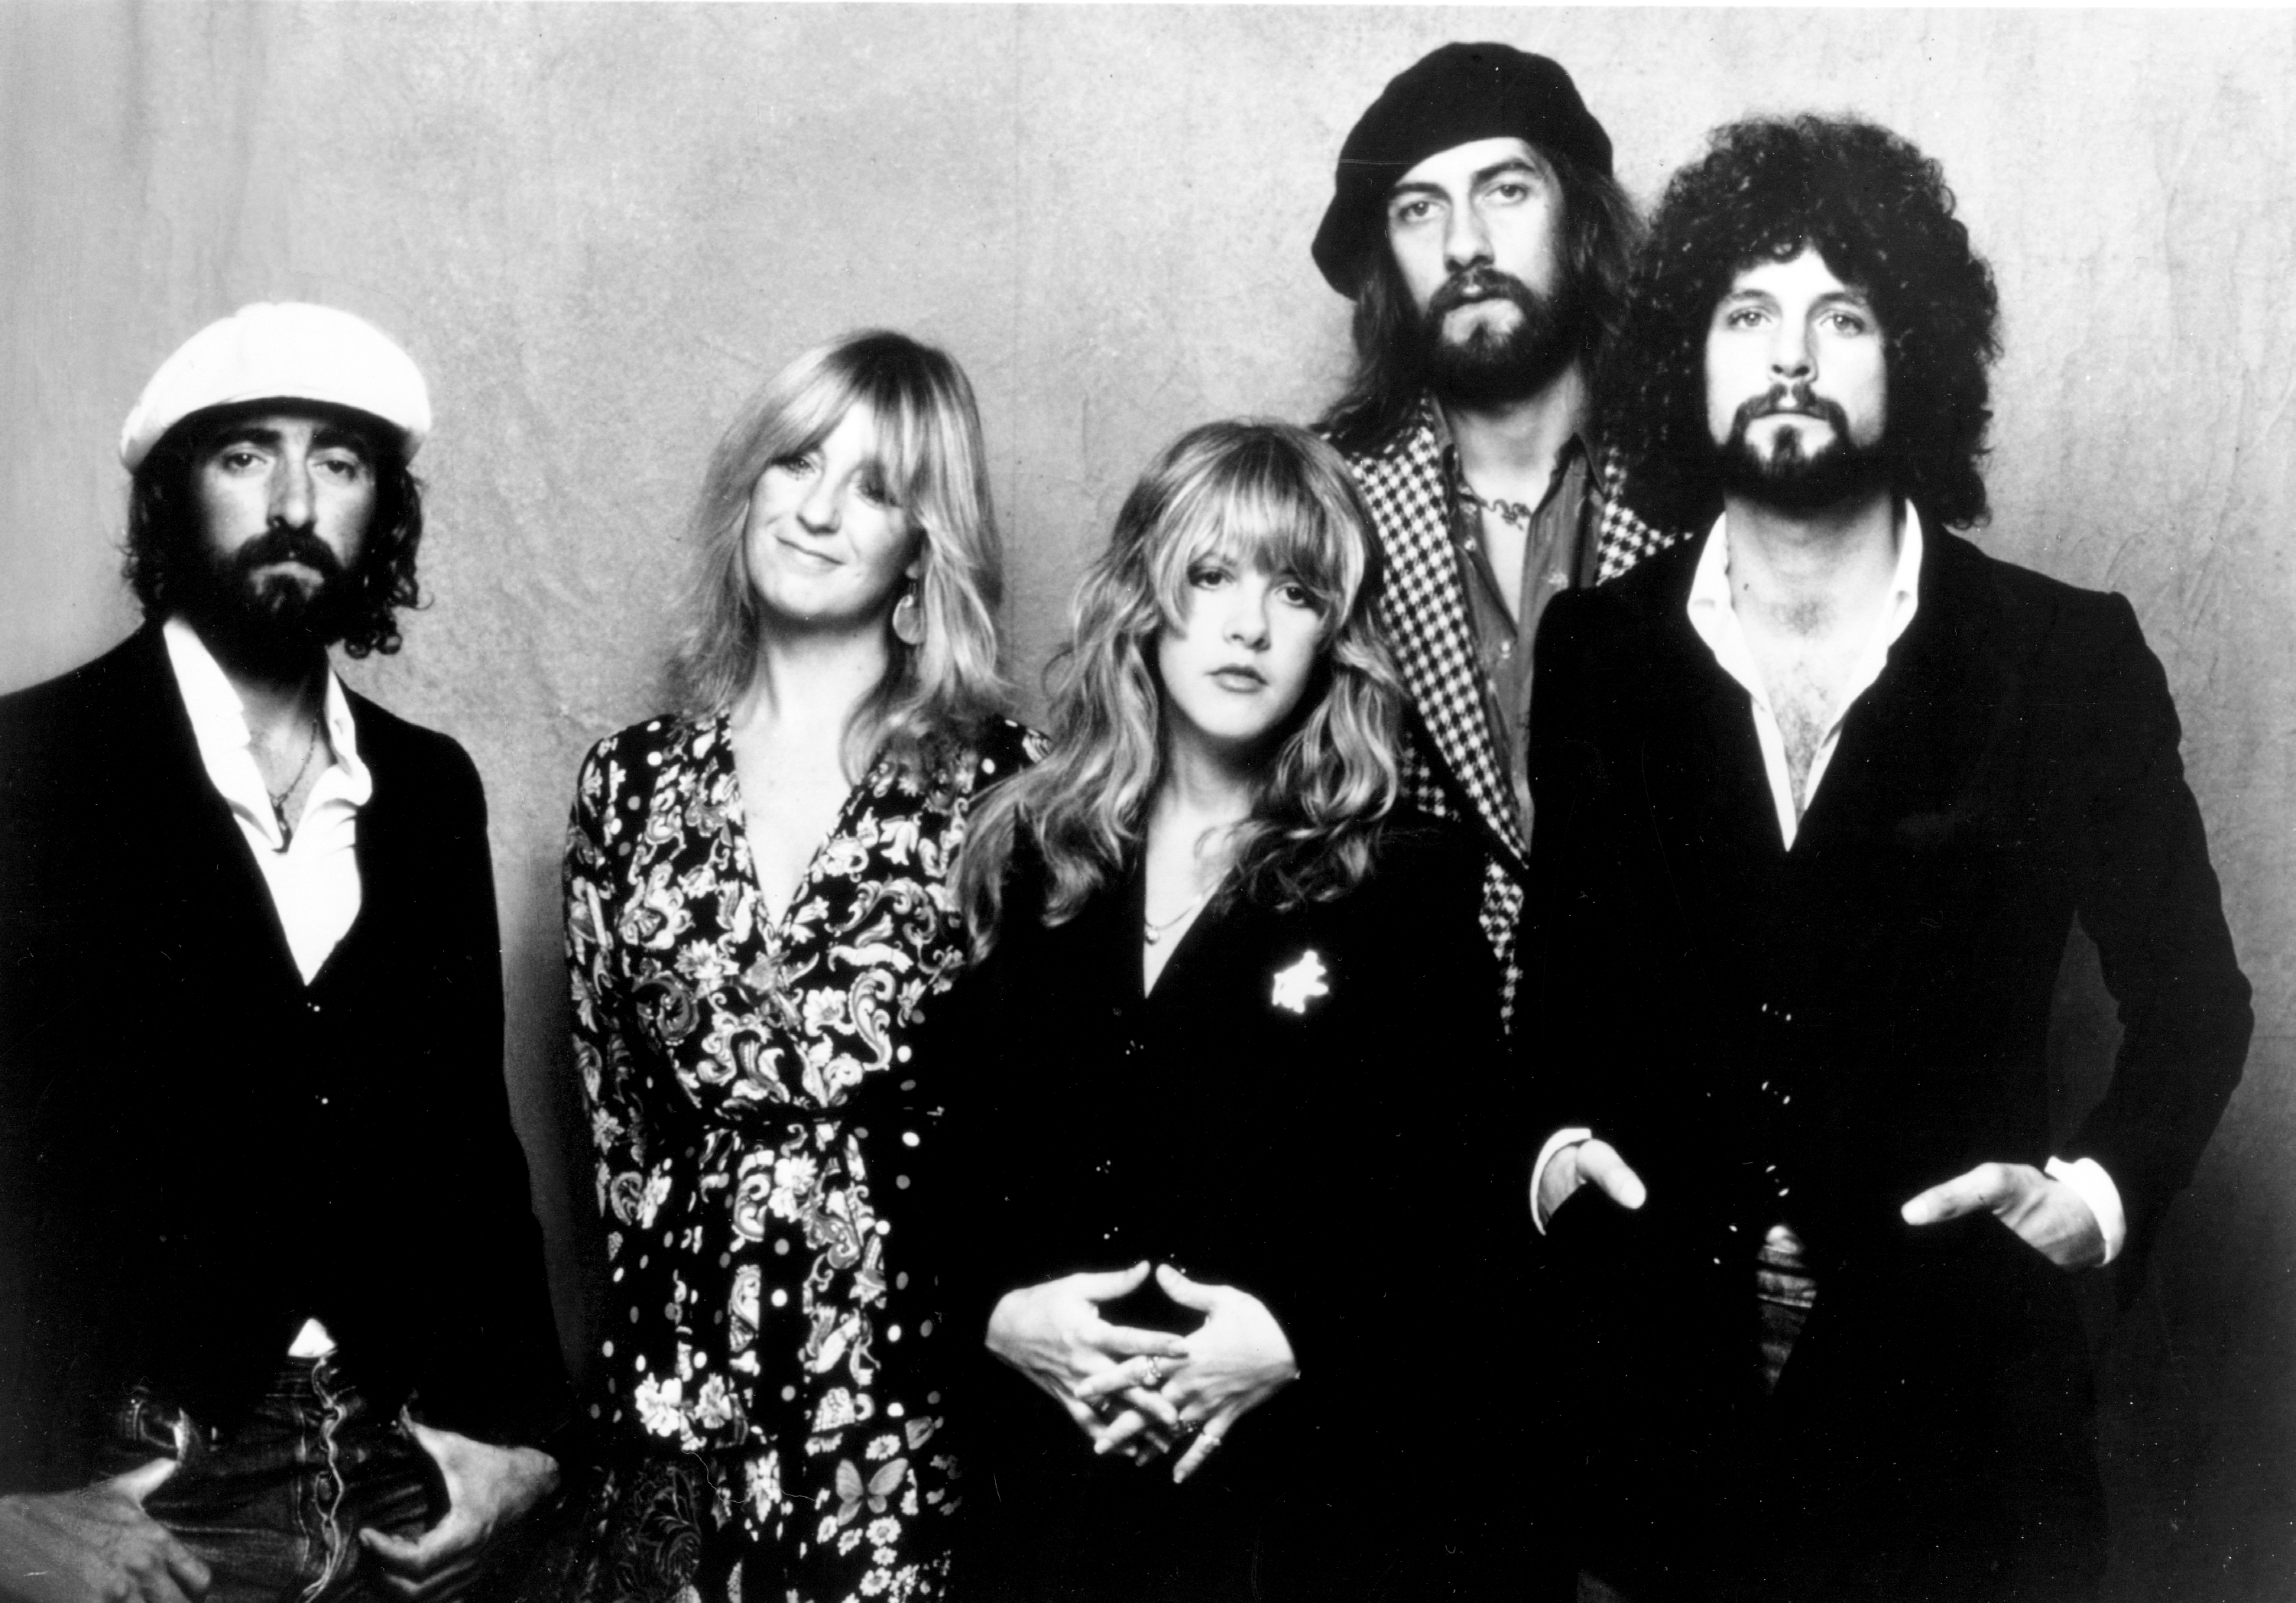 Fleetwood Mac's John McVie, Christine McVie, Stevie Nicks, Mick Fleetwood, and Lindsey Buckingham in front of a wall